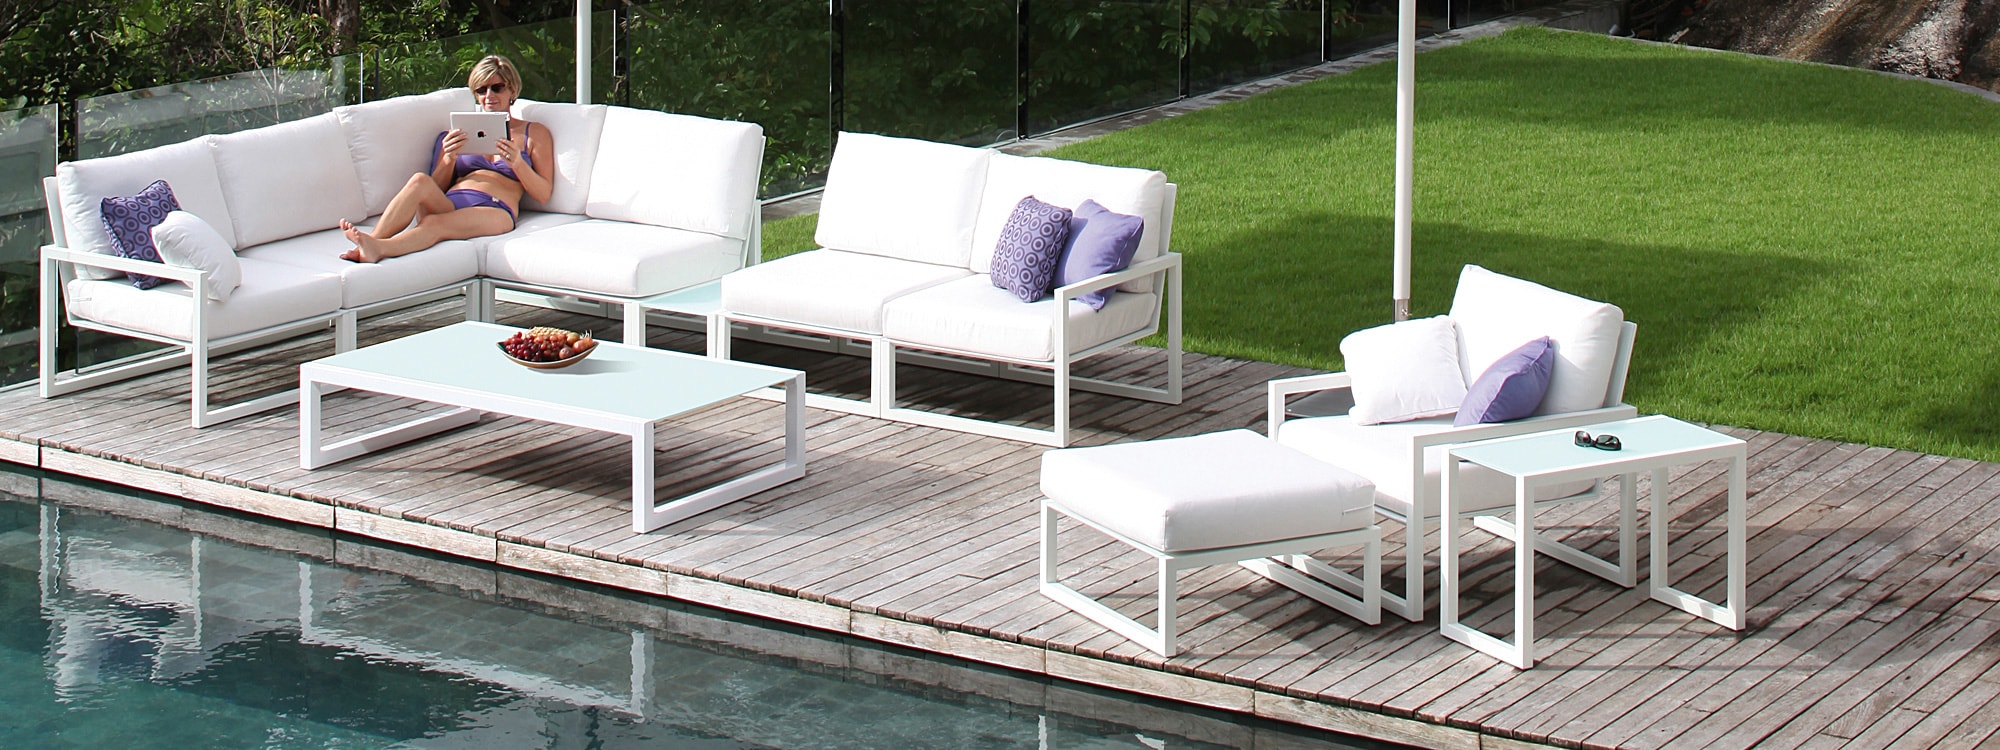 White Ninix lounge set from Encompassco modern outdoor furniture